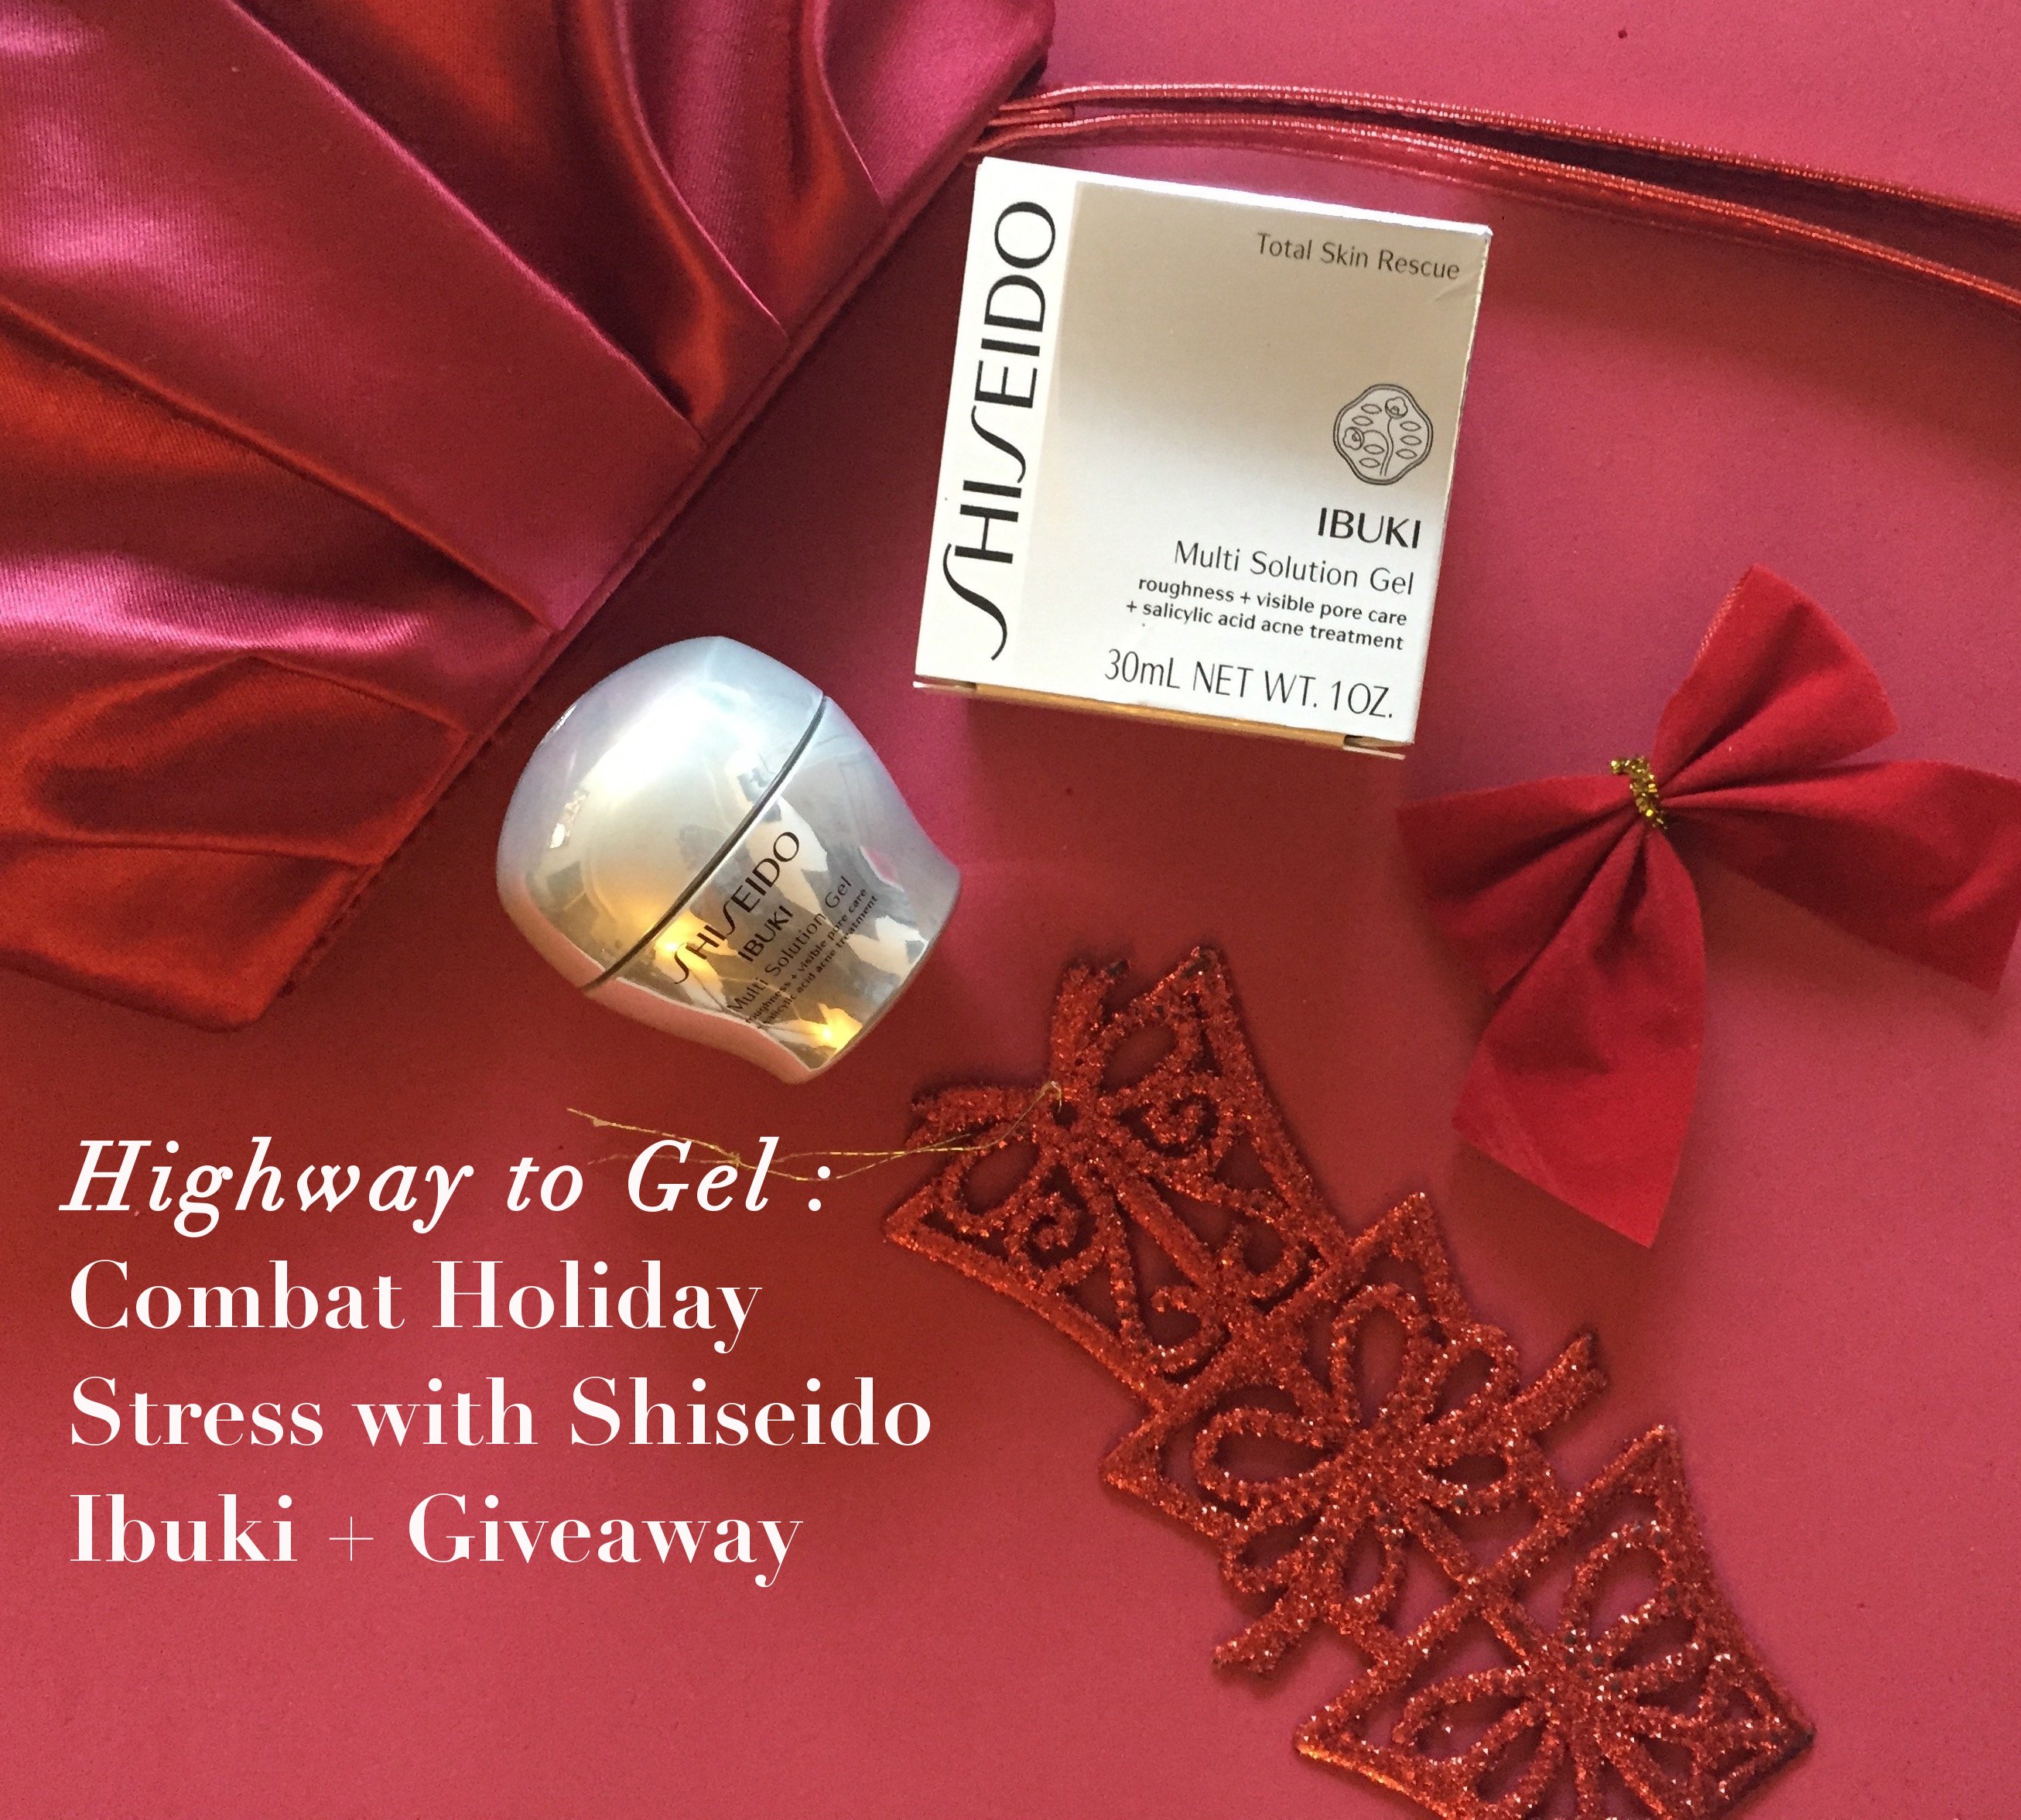 shiseido, ibuki, eye care, skincare, beauty, holiday beauty , shiseido, holiday giveaway, holiday beauty